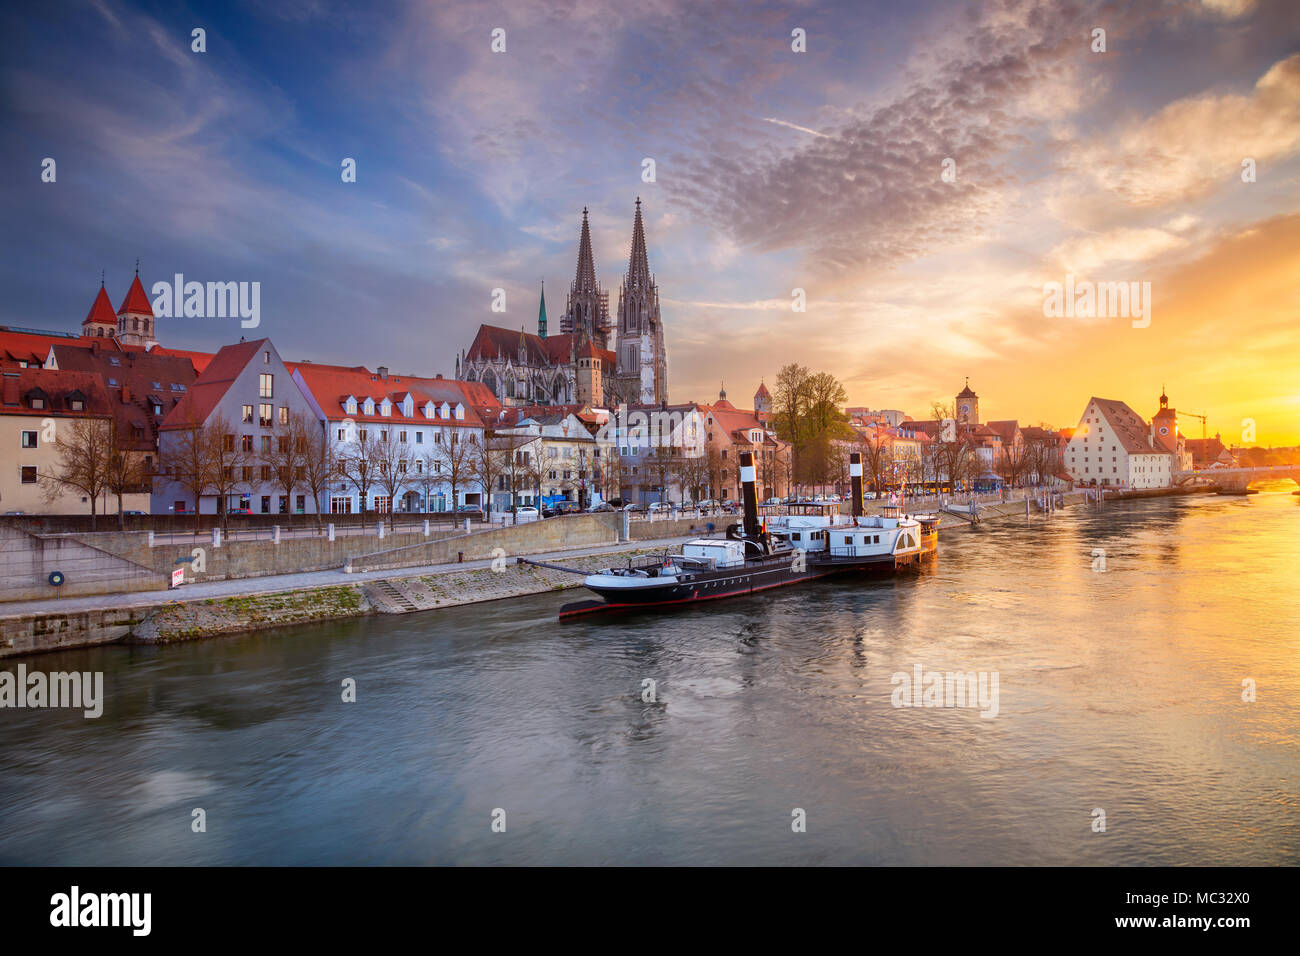 Regensburg. Cityscape image of Regensburg, Germany during spring sunset. Stock Photo